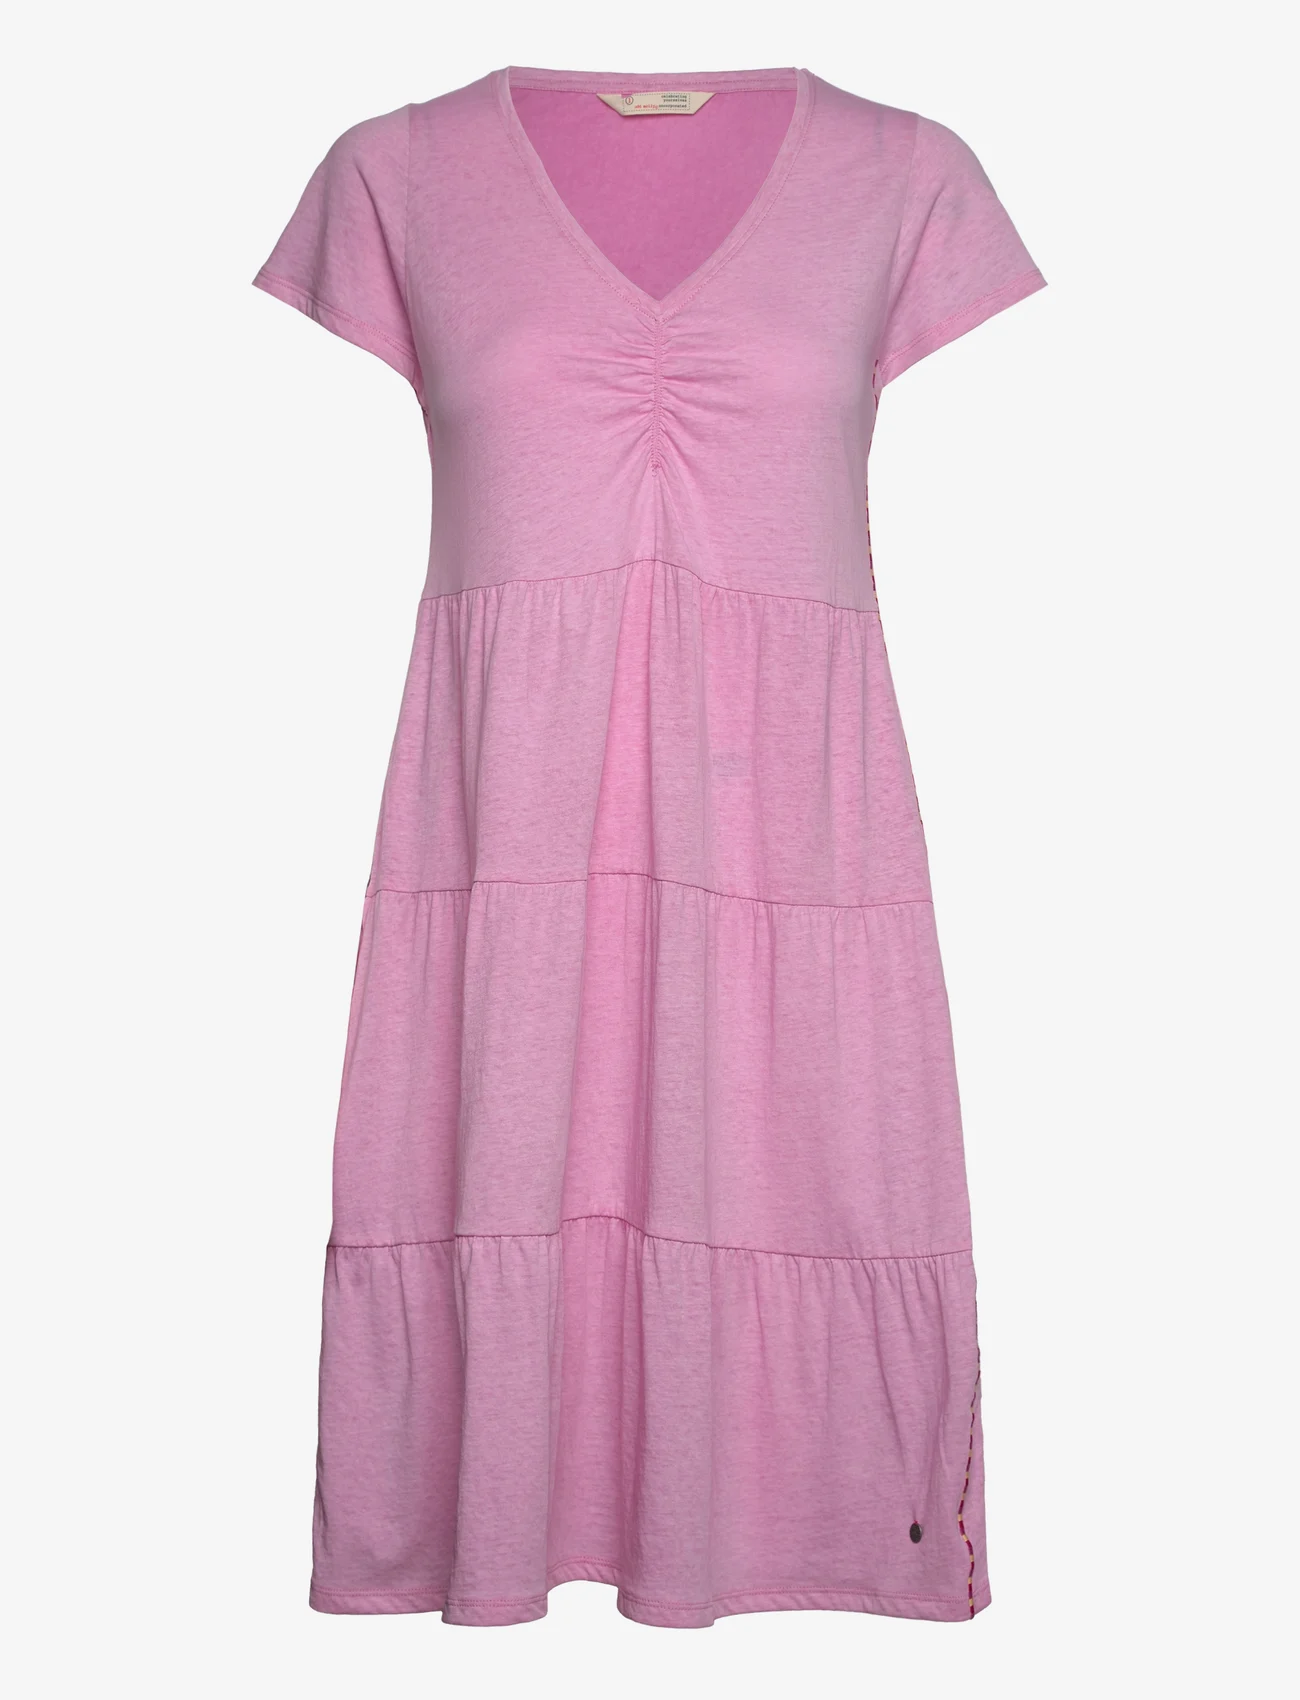 ODD MOLLY - Freya Dress - summer dresses - meadow pink - 0